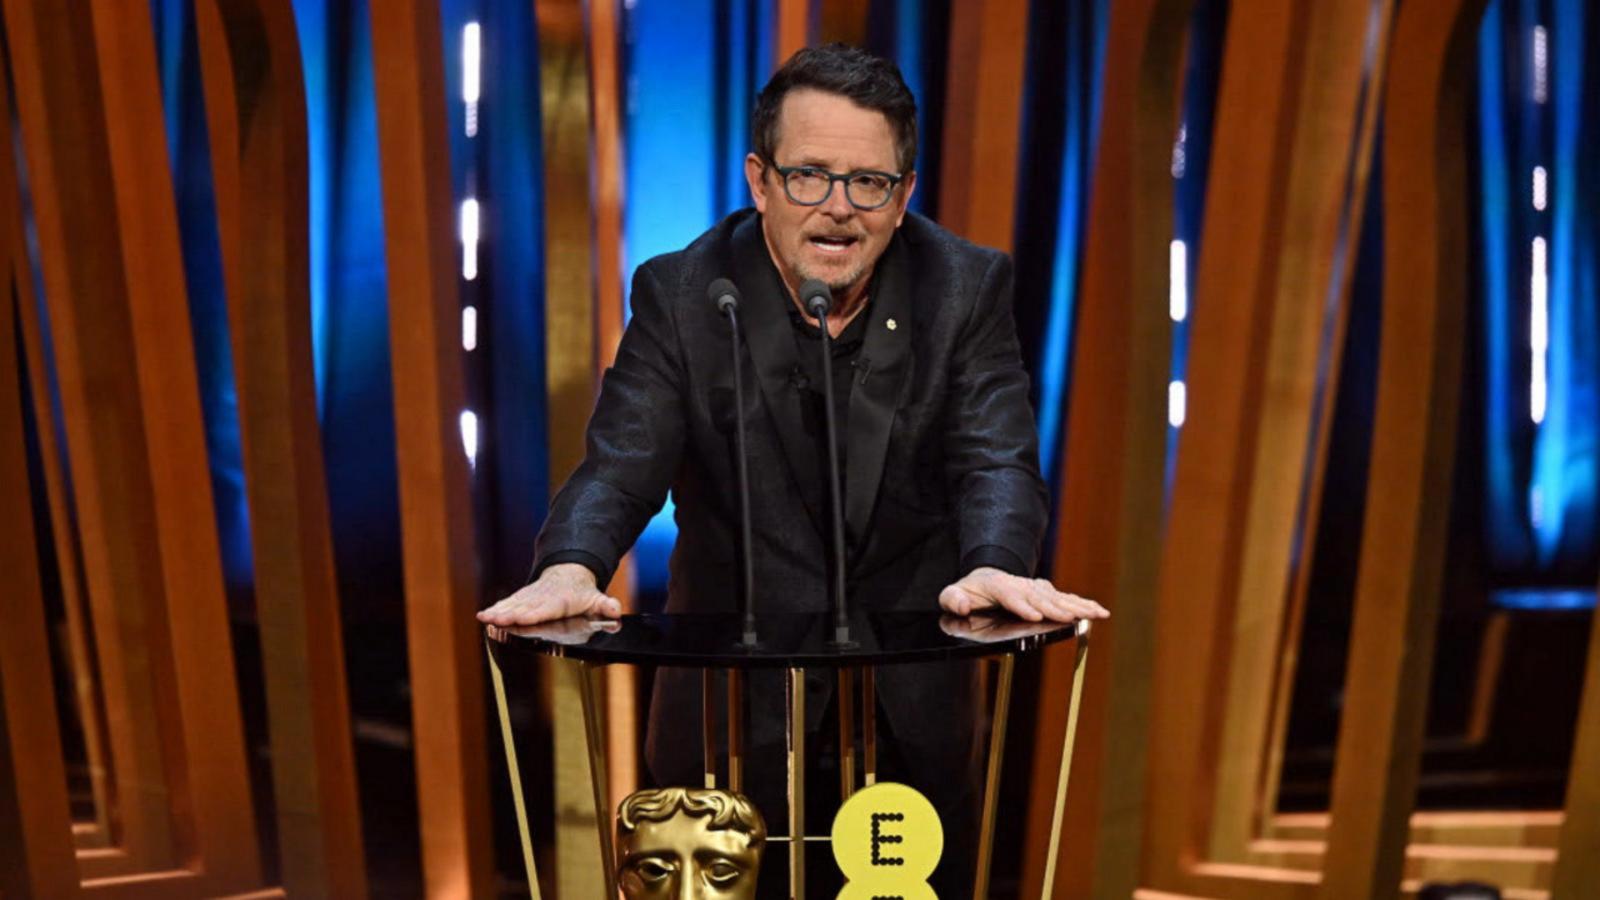 Michael J. Fox gets standing ovation at BAFTAs Good Morning America